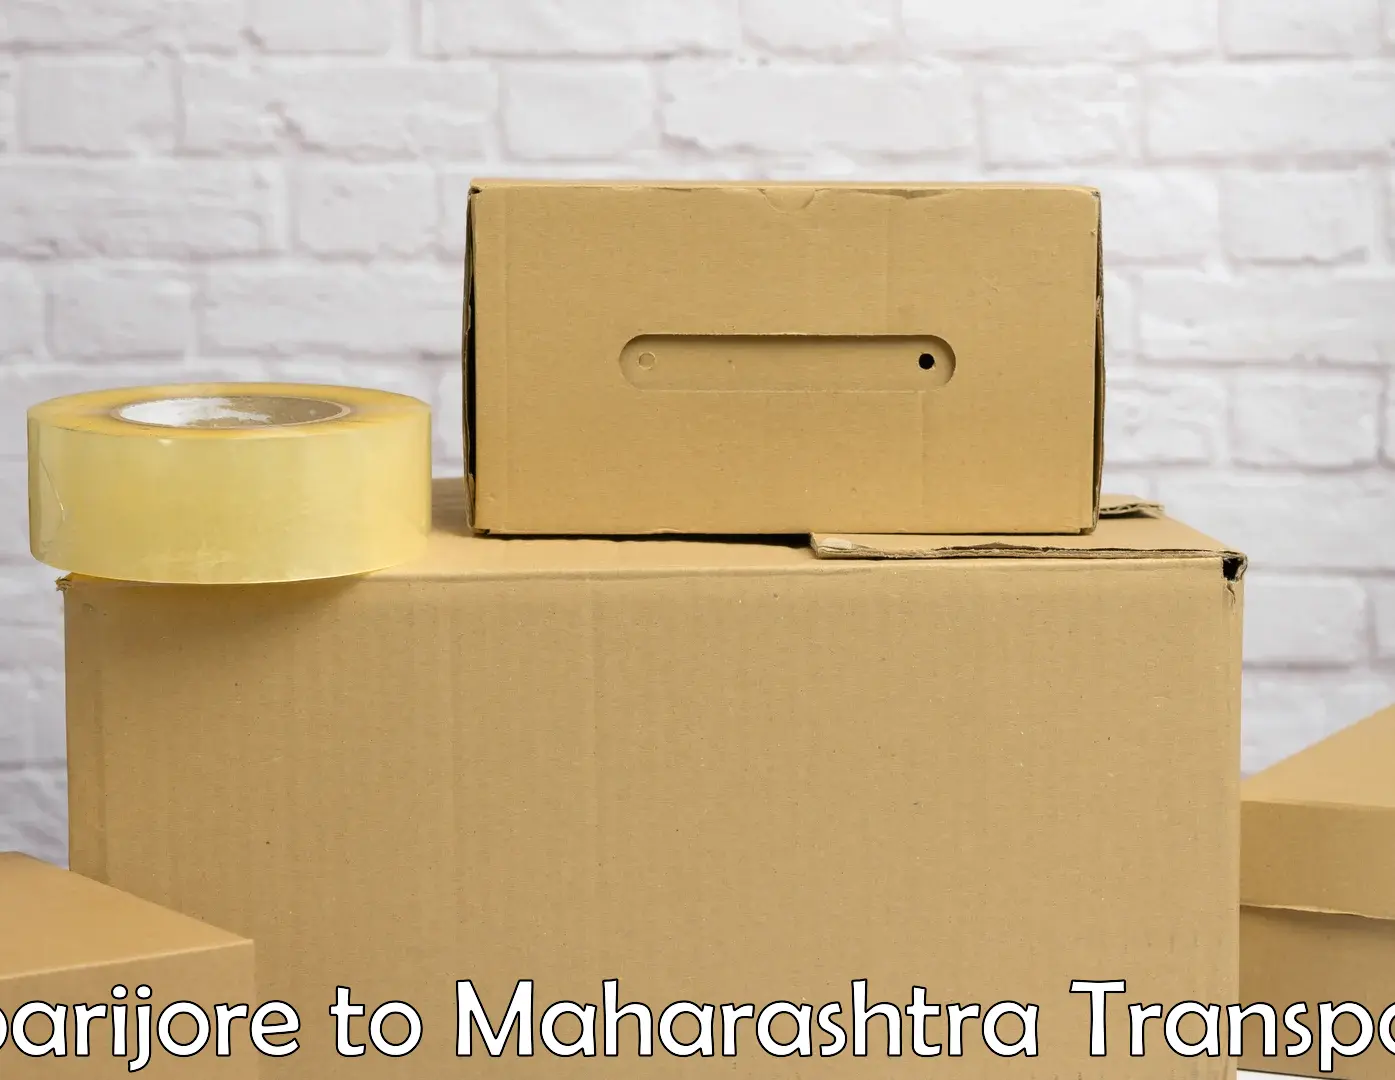 Transport shared services in Boarijore to Maharashtra